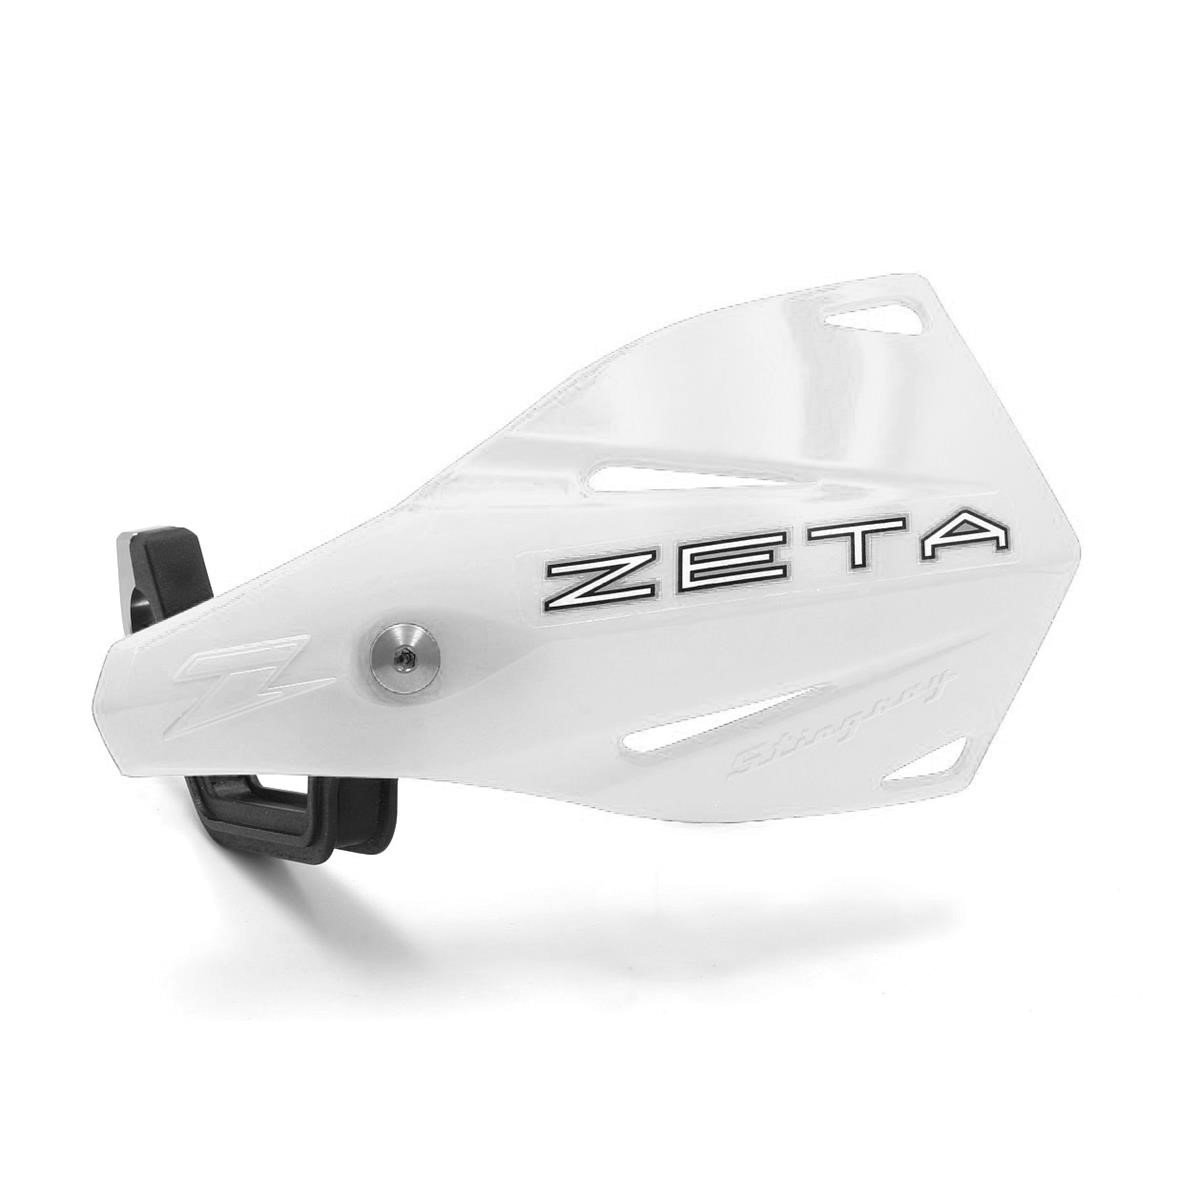 Zeta Handguards Stingray White, Incl. Mounting Kit